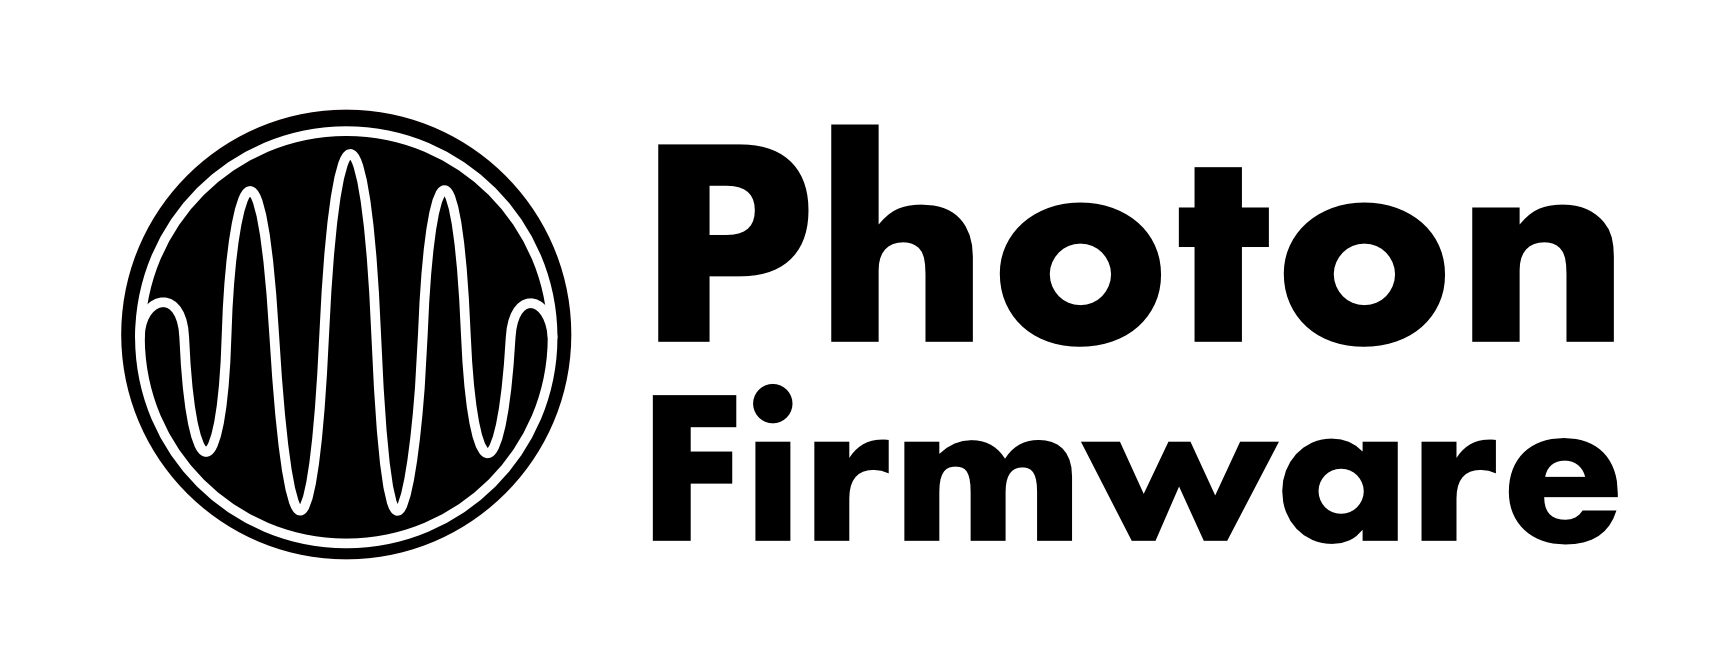 Photon Firmware